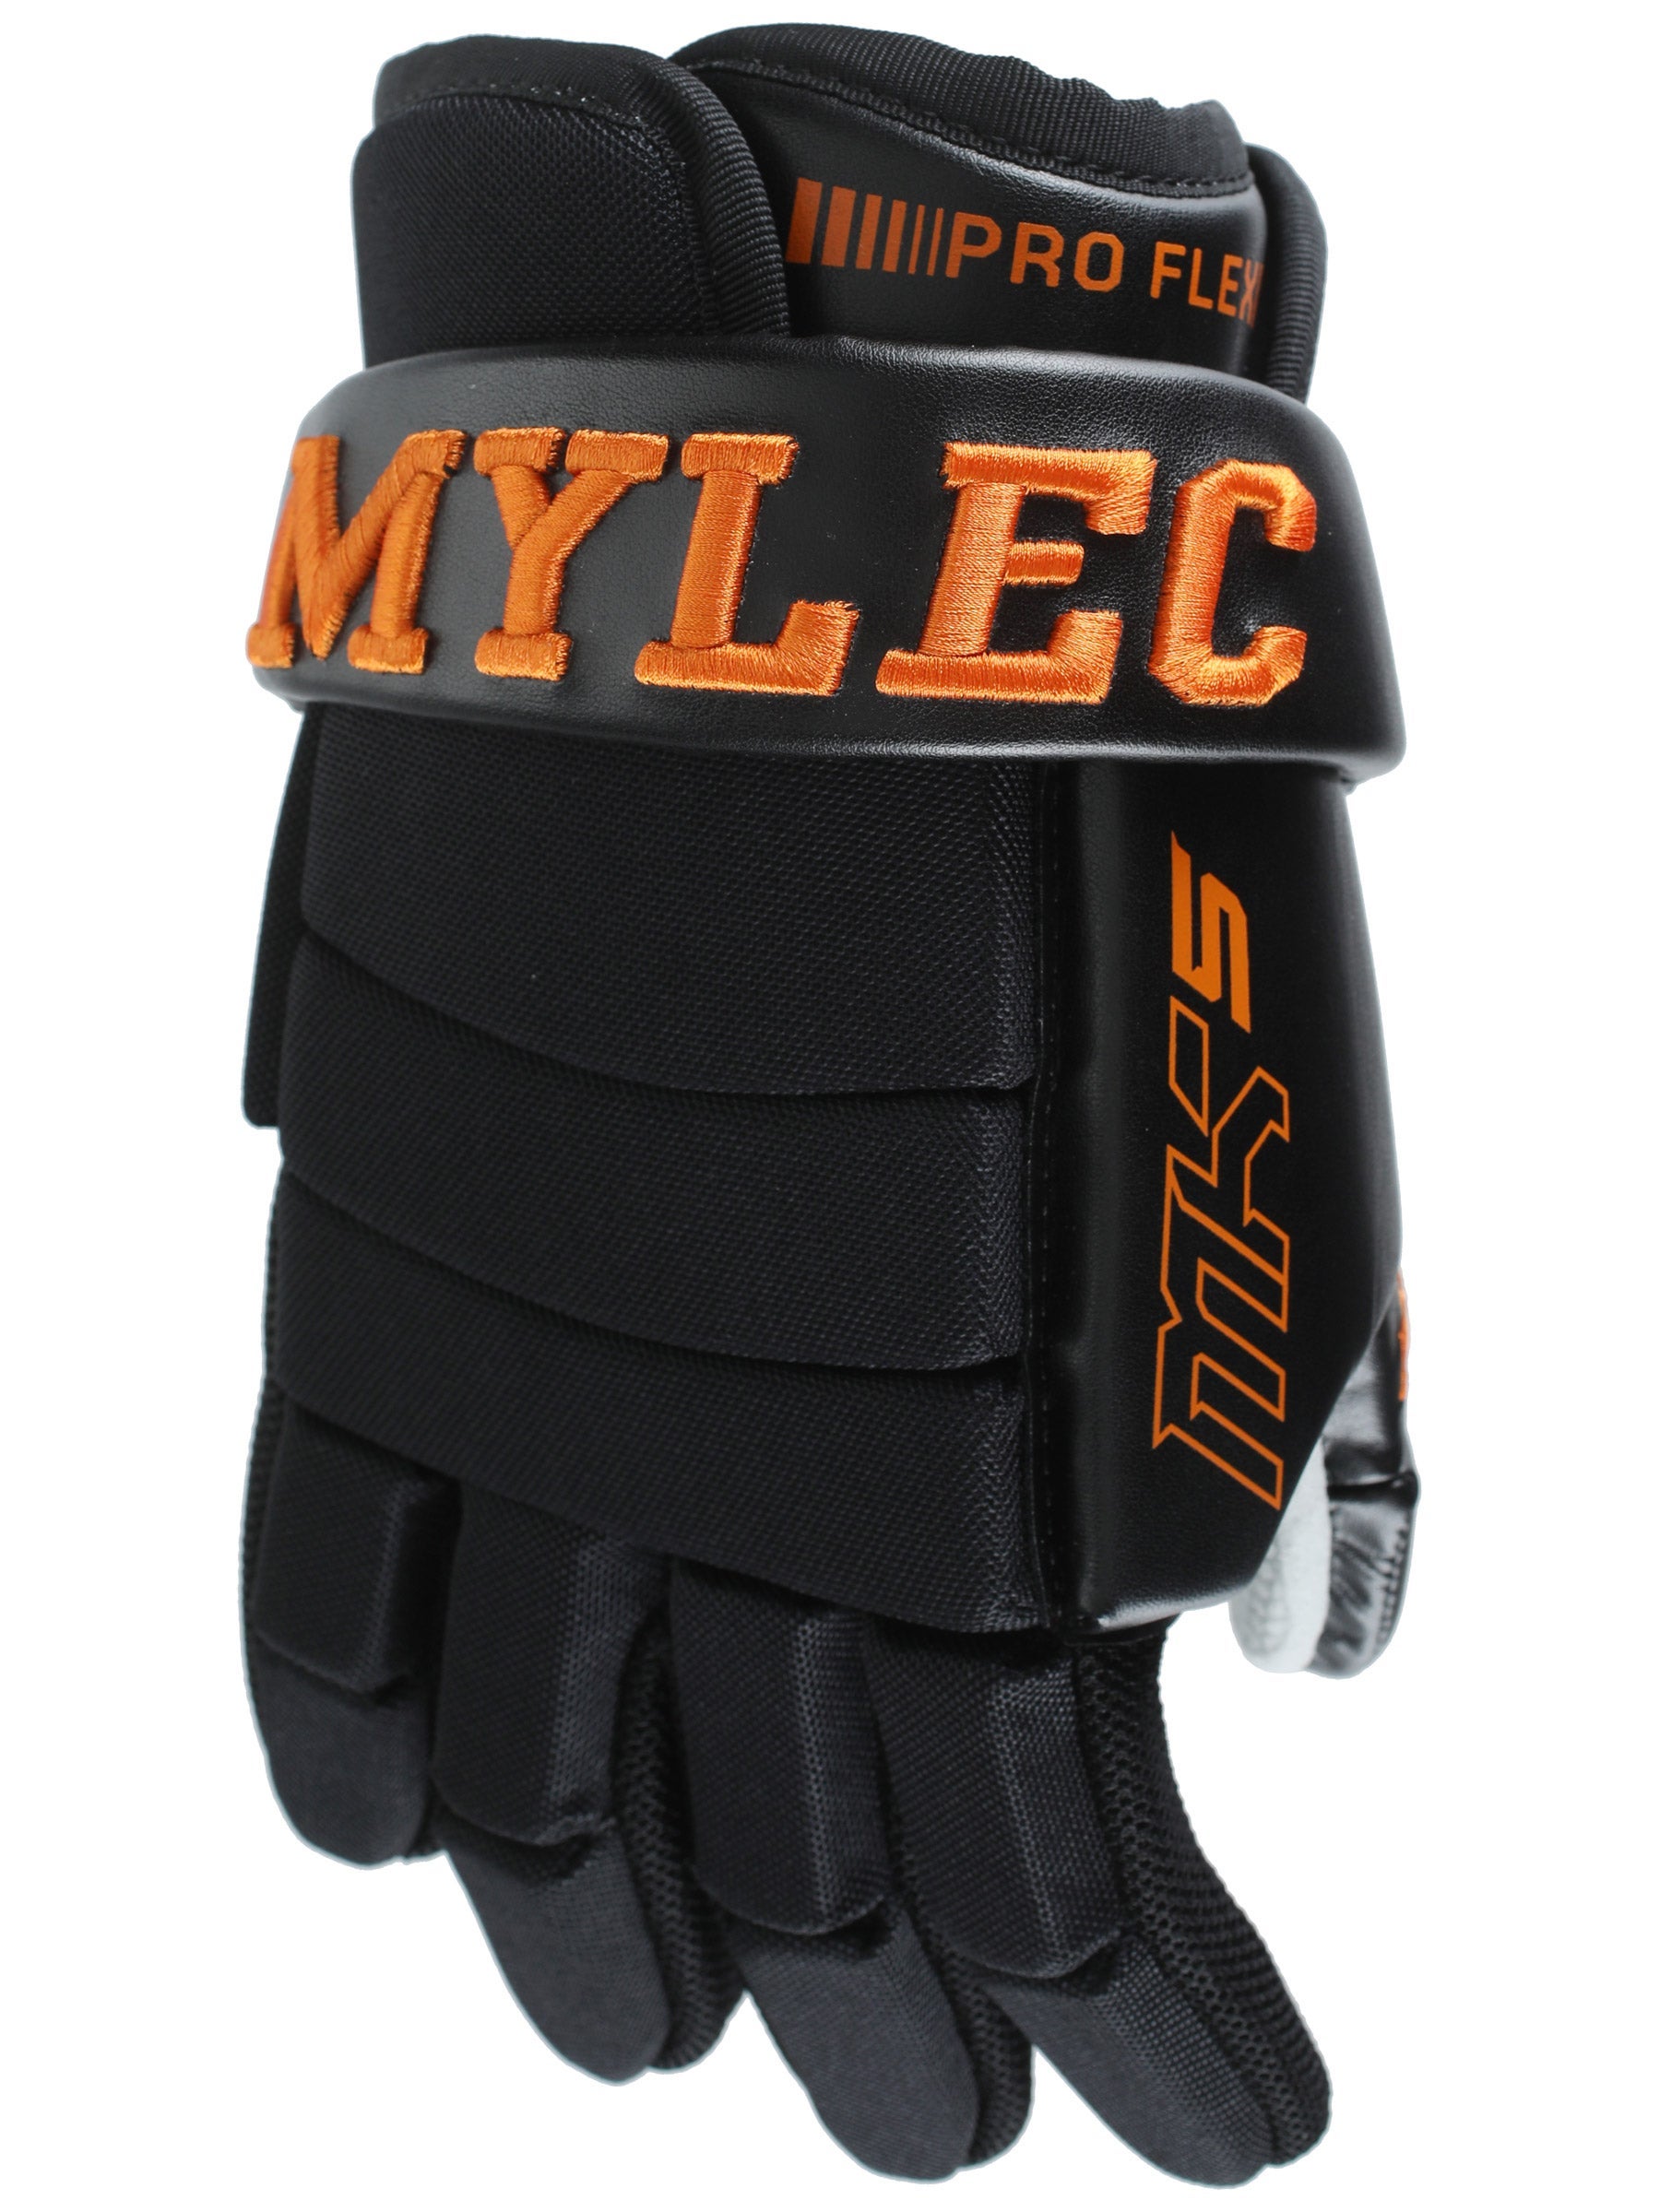 Mylec Roller Street Hockey Player Gloves Size Large 590a for sale online 